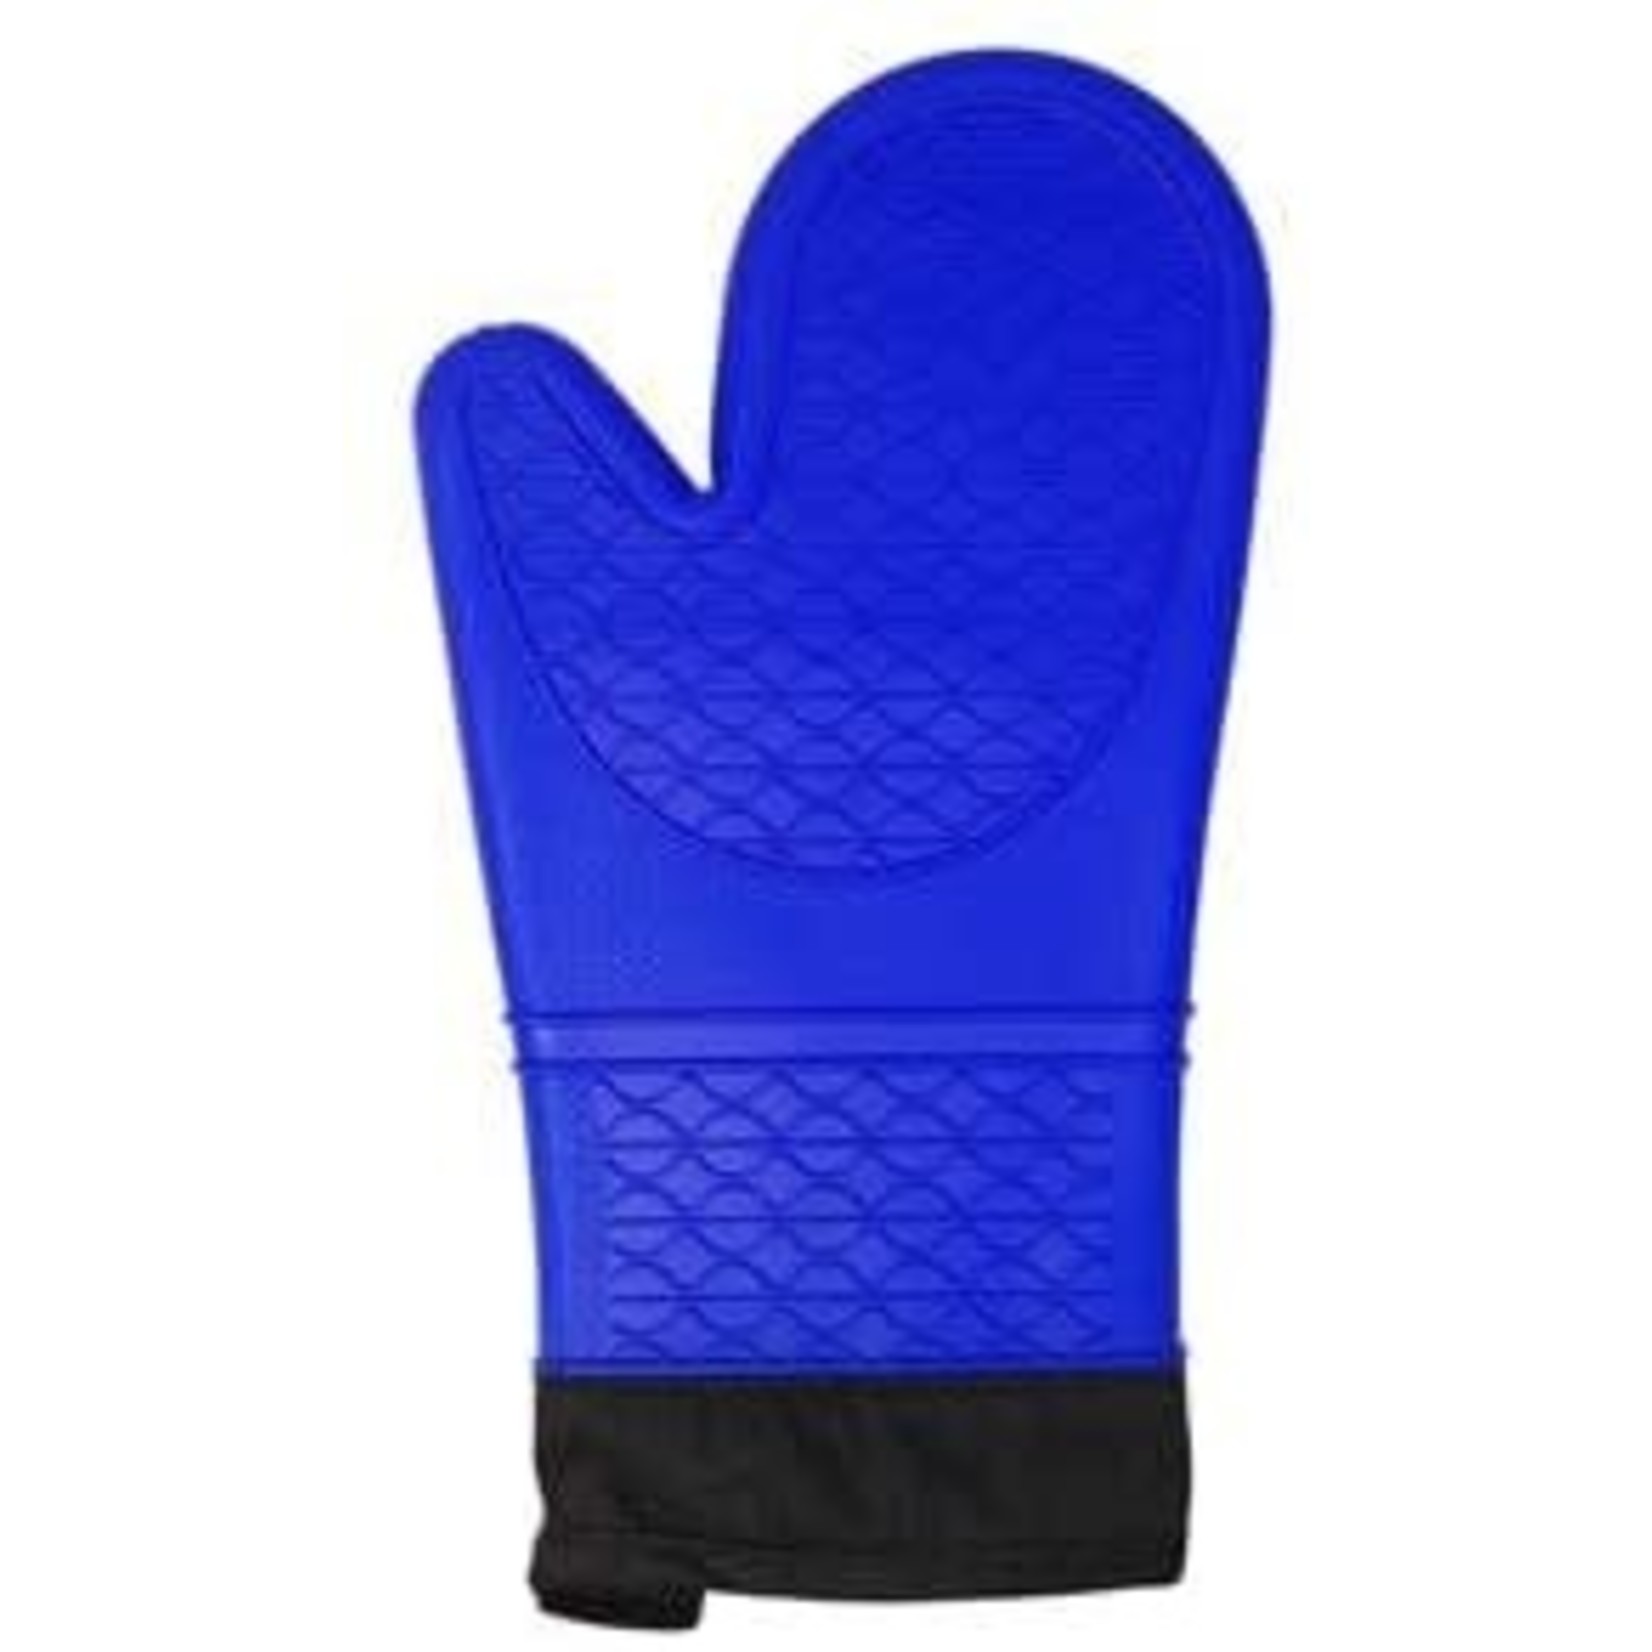 https://cdn.shoplightspeed.com/shops/627977/files/40490032/1652x1652x2/tws-cool-touch-scilione-oven-mitts-dark-blue-13.jpg